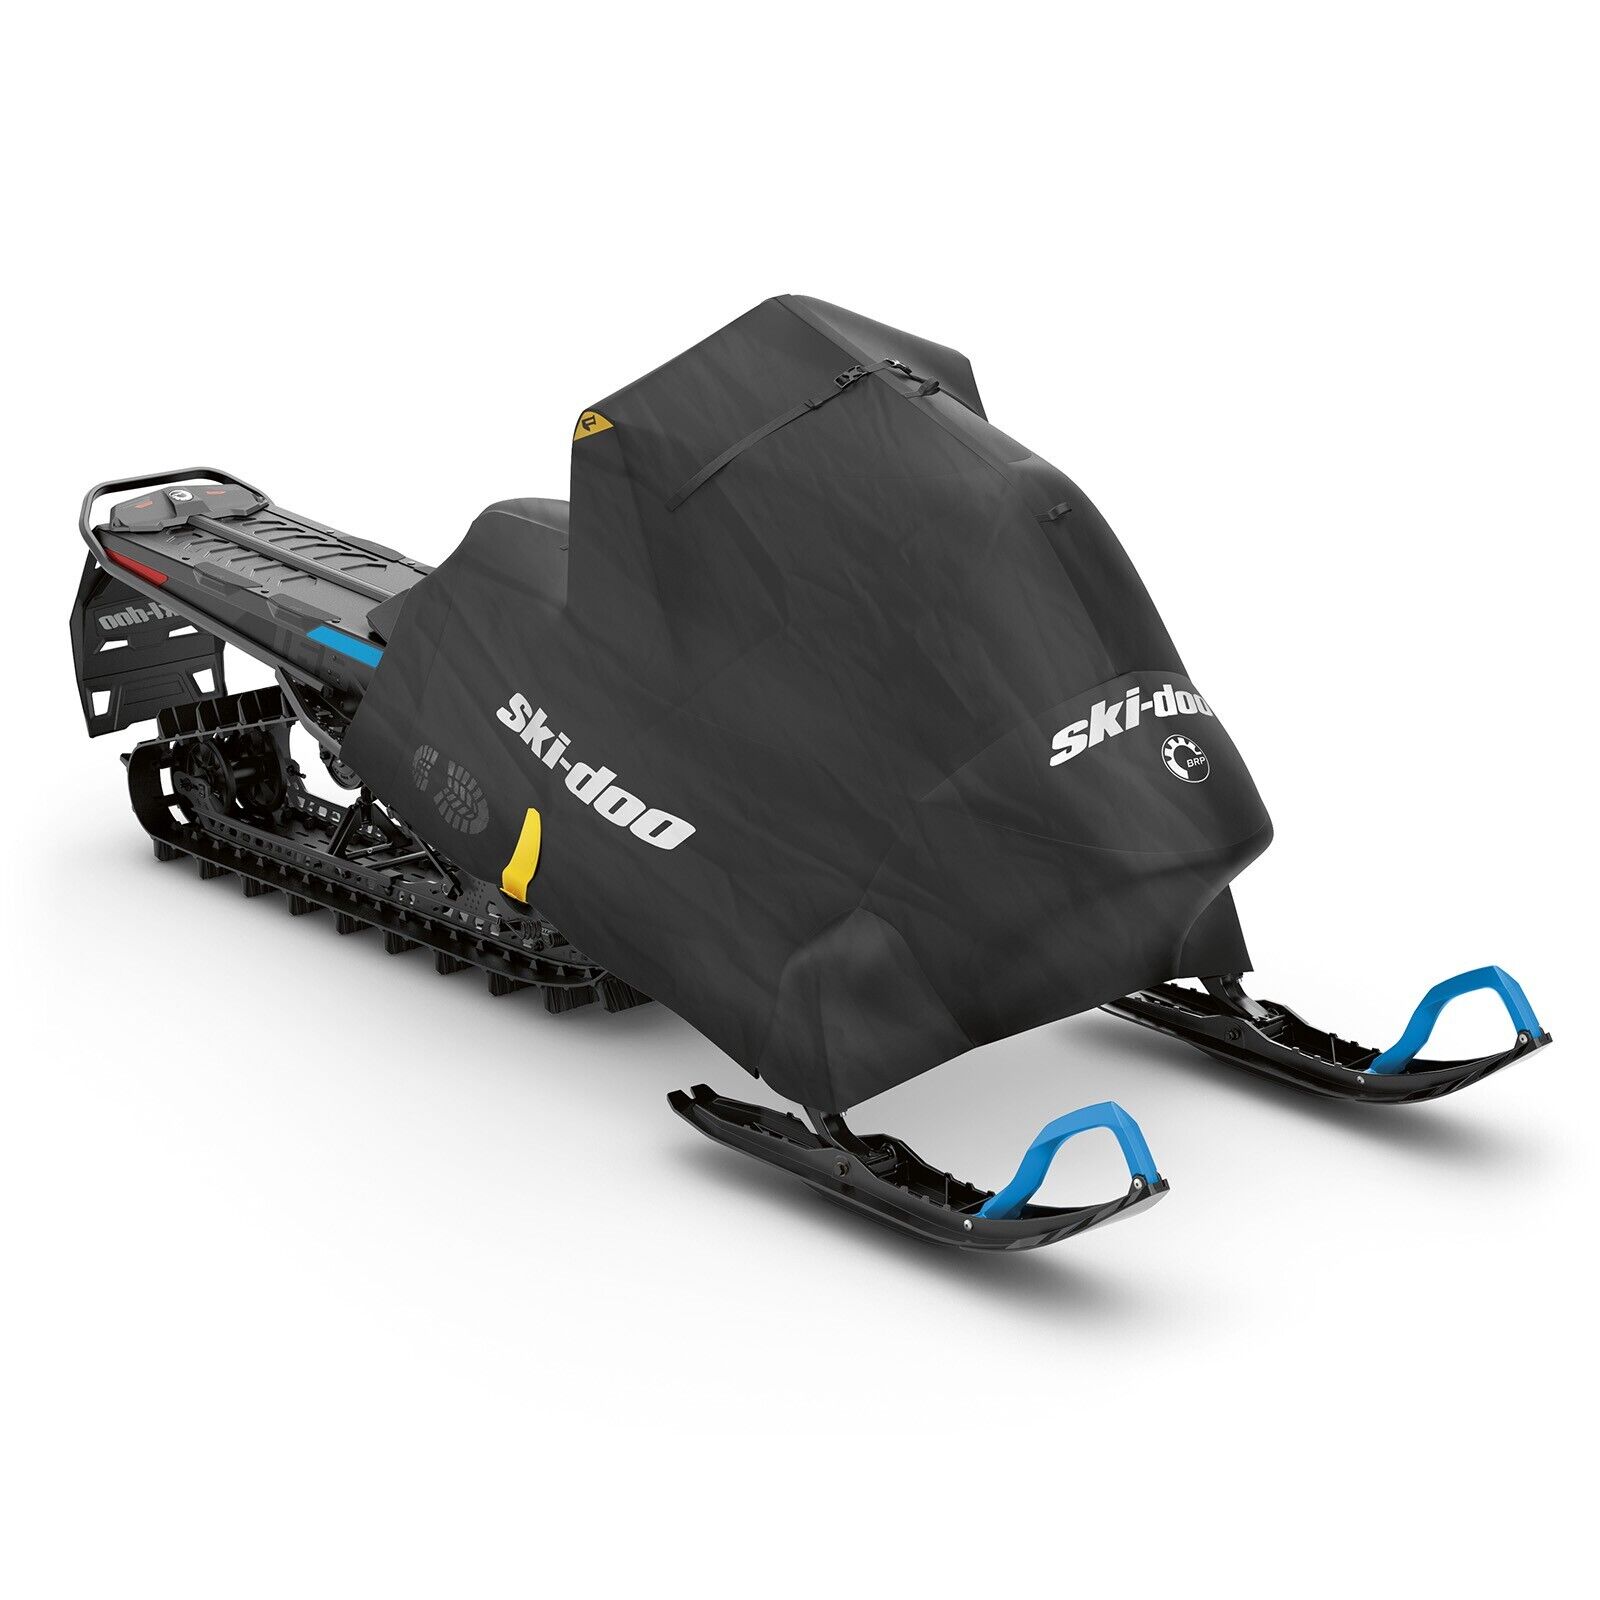 Ski-Doo Ride-On-Cover (ROC) System (REV Gen4 Summit SP, Summit X,) 860201440